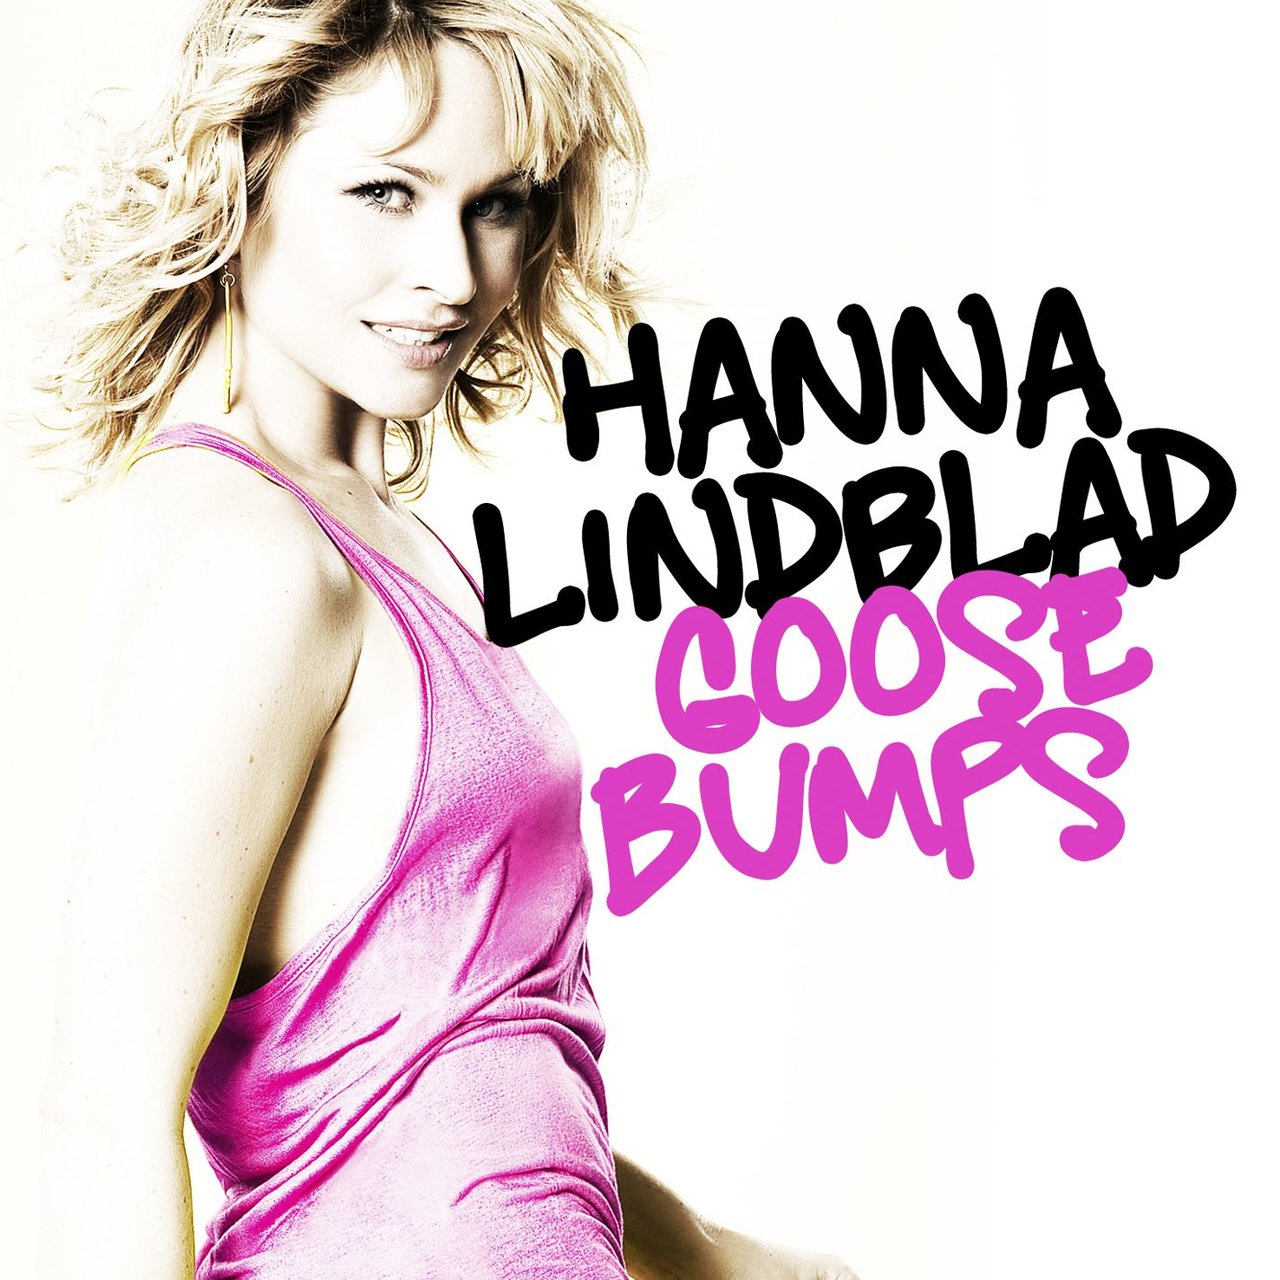 Hanna Lindblad Goosebumps cover artwork